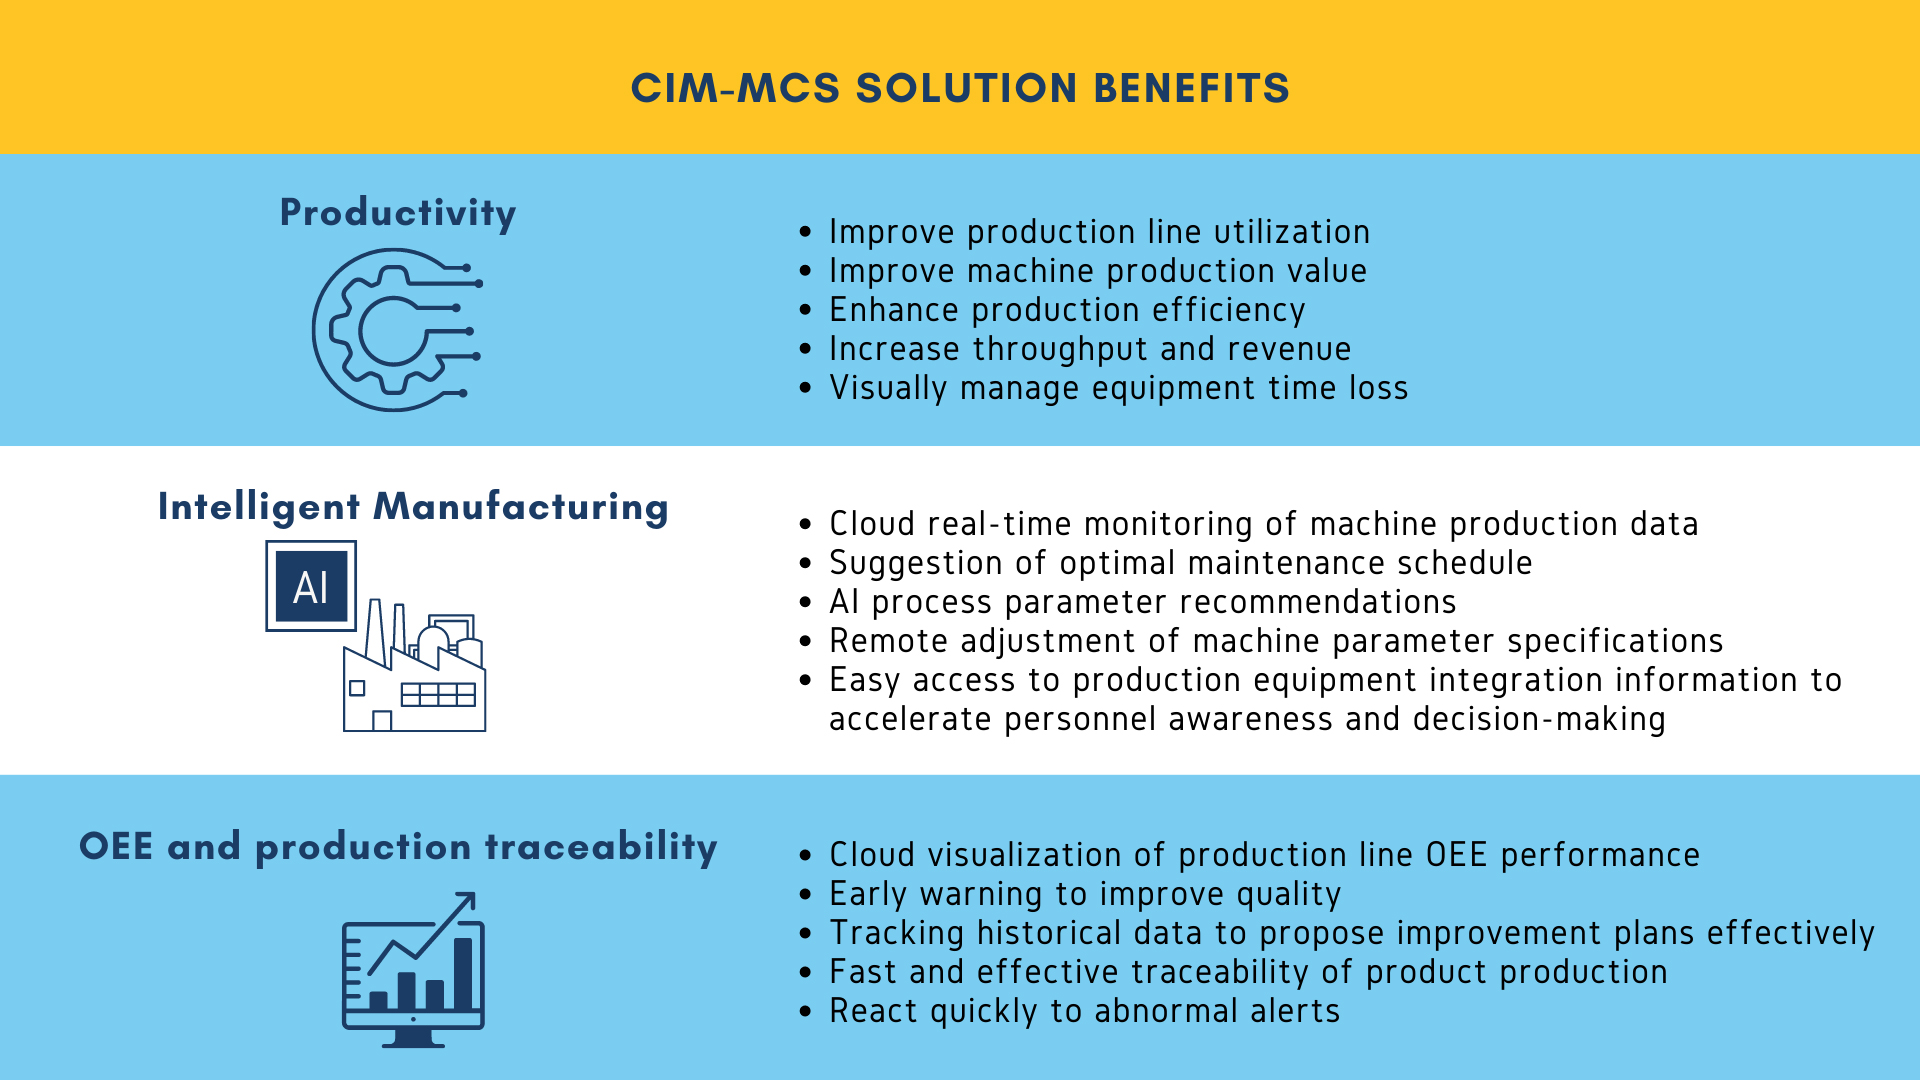 CIM-MCS Benefits: Higher Production Efficiency